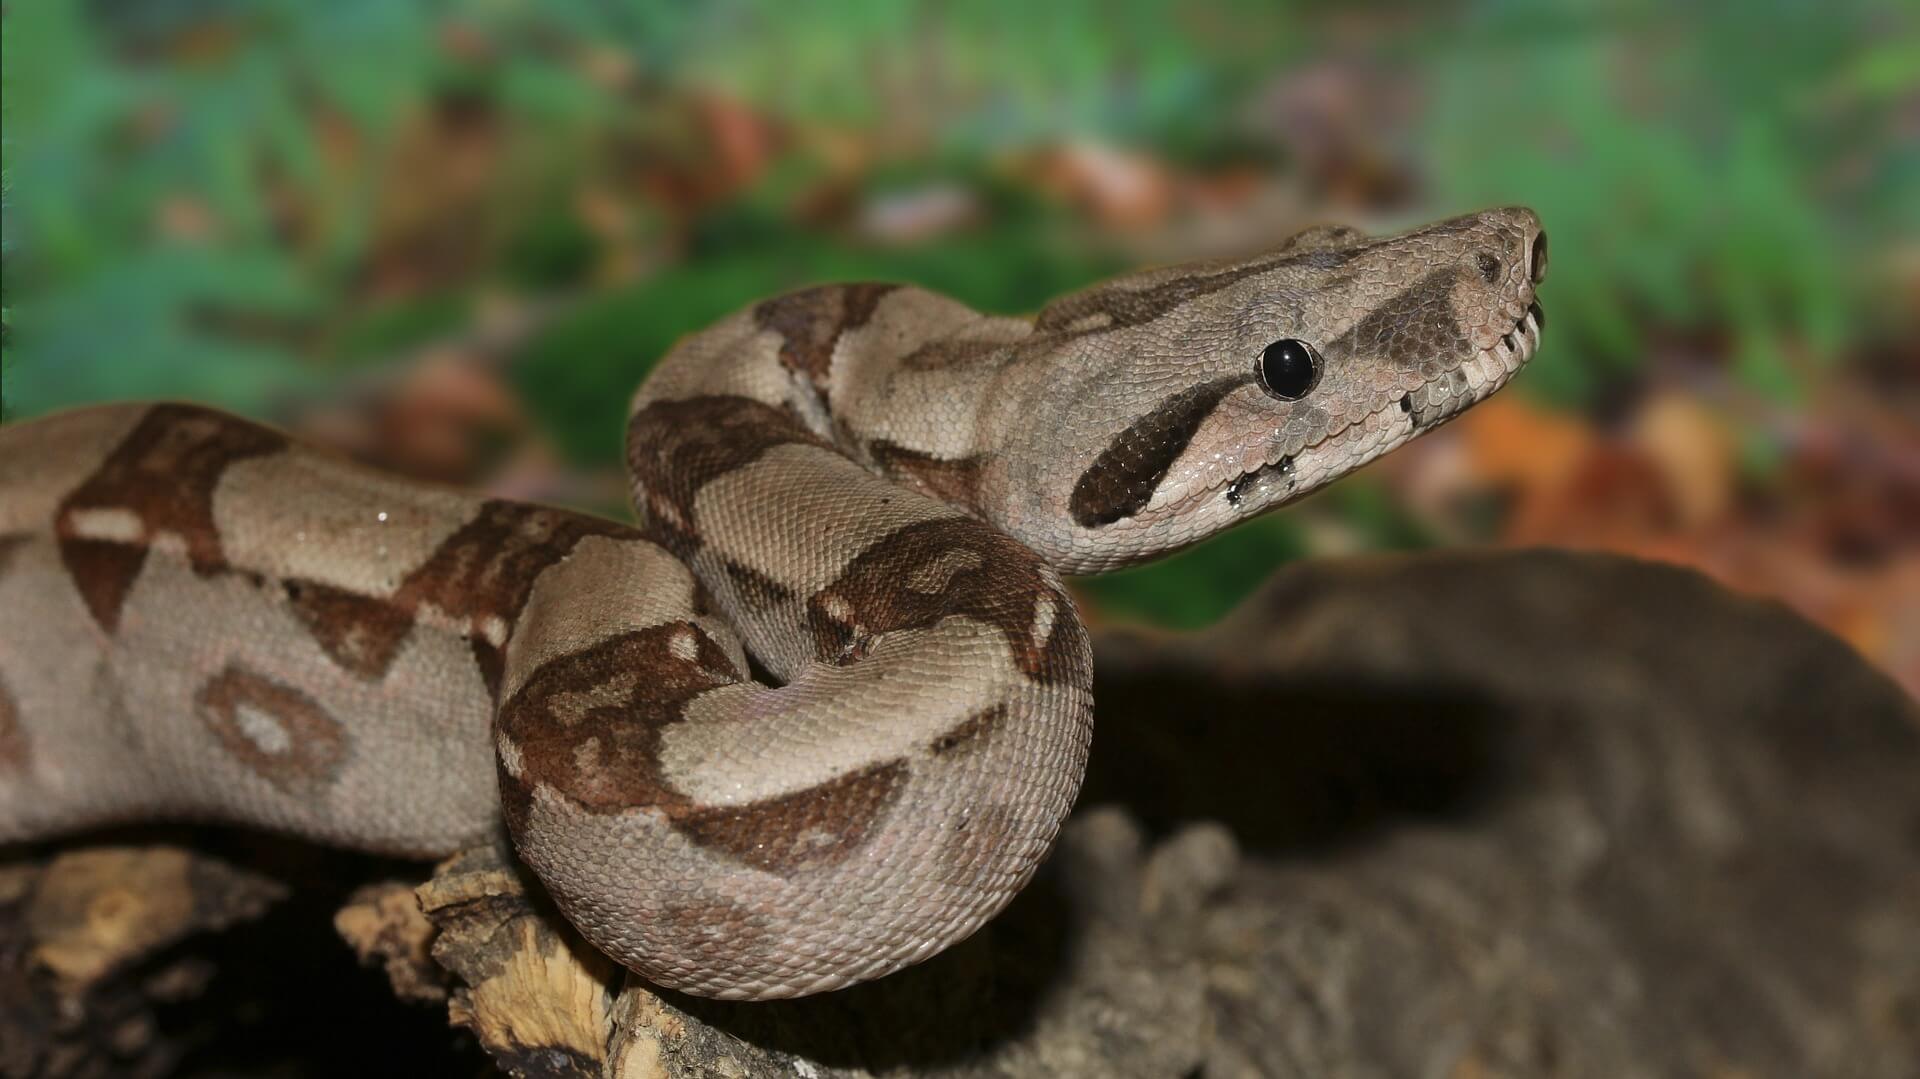 https://pixabay.com/en/emperor-snake-boa-snake-501569/